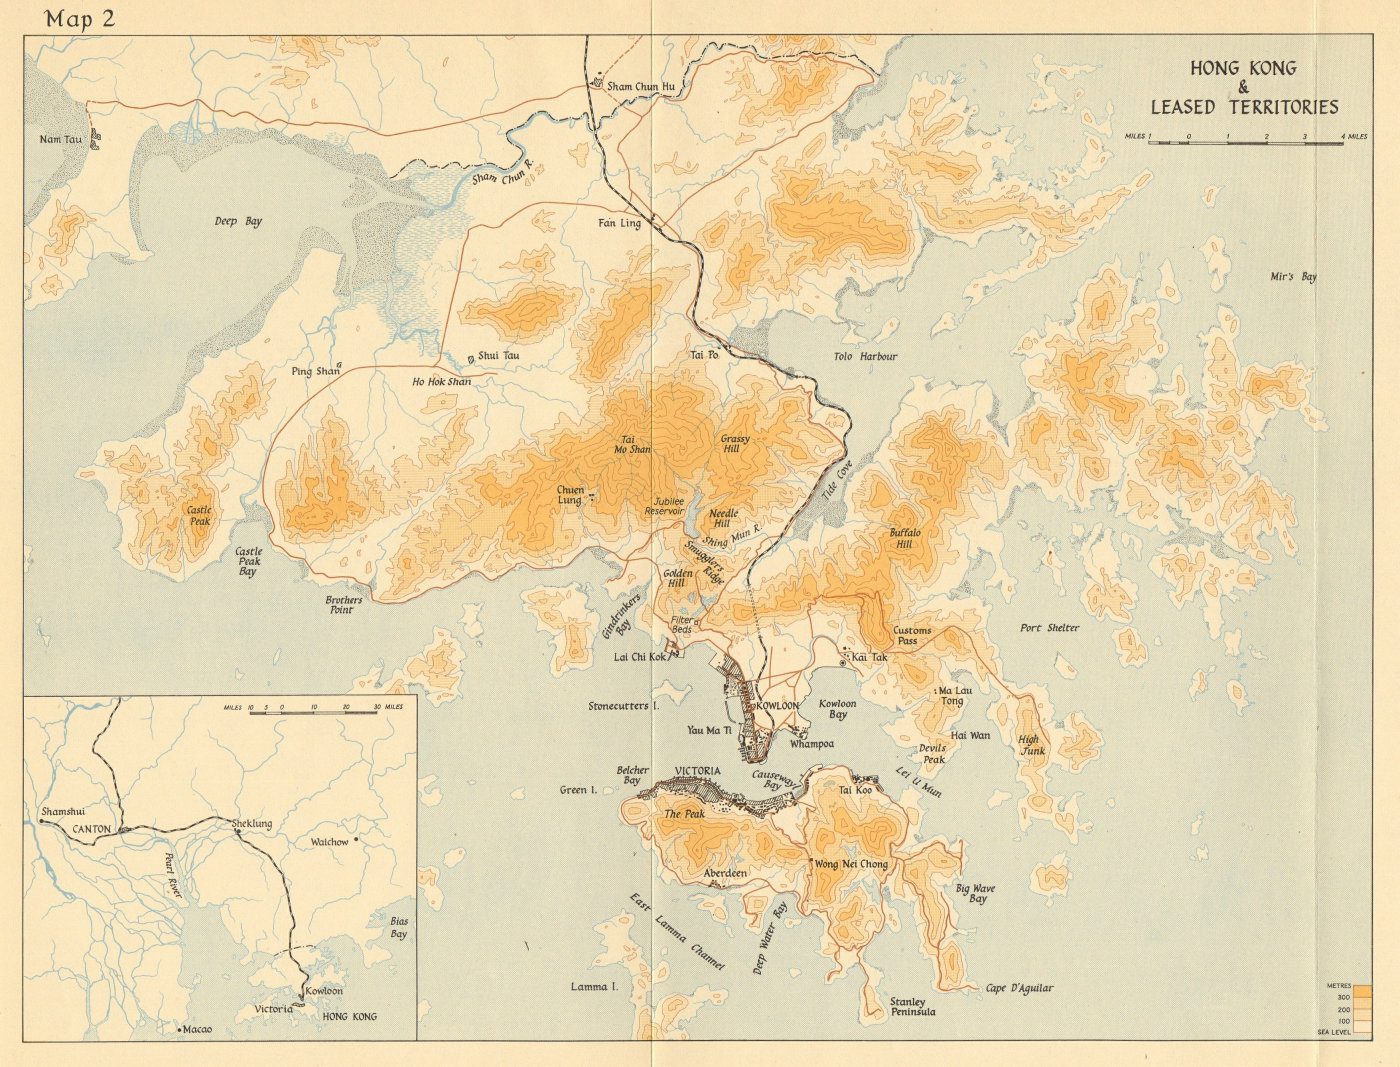 Hong Kong Map 1941 